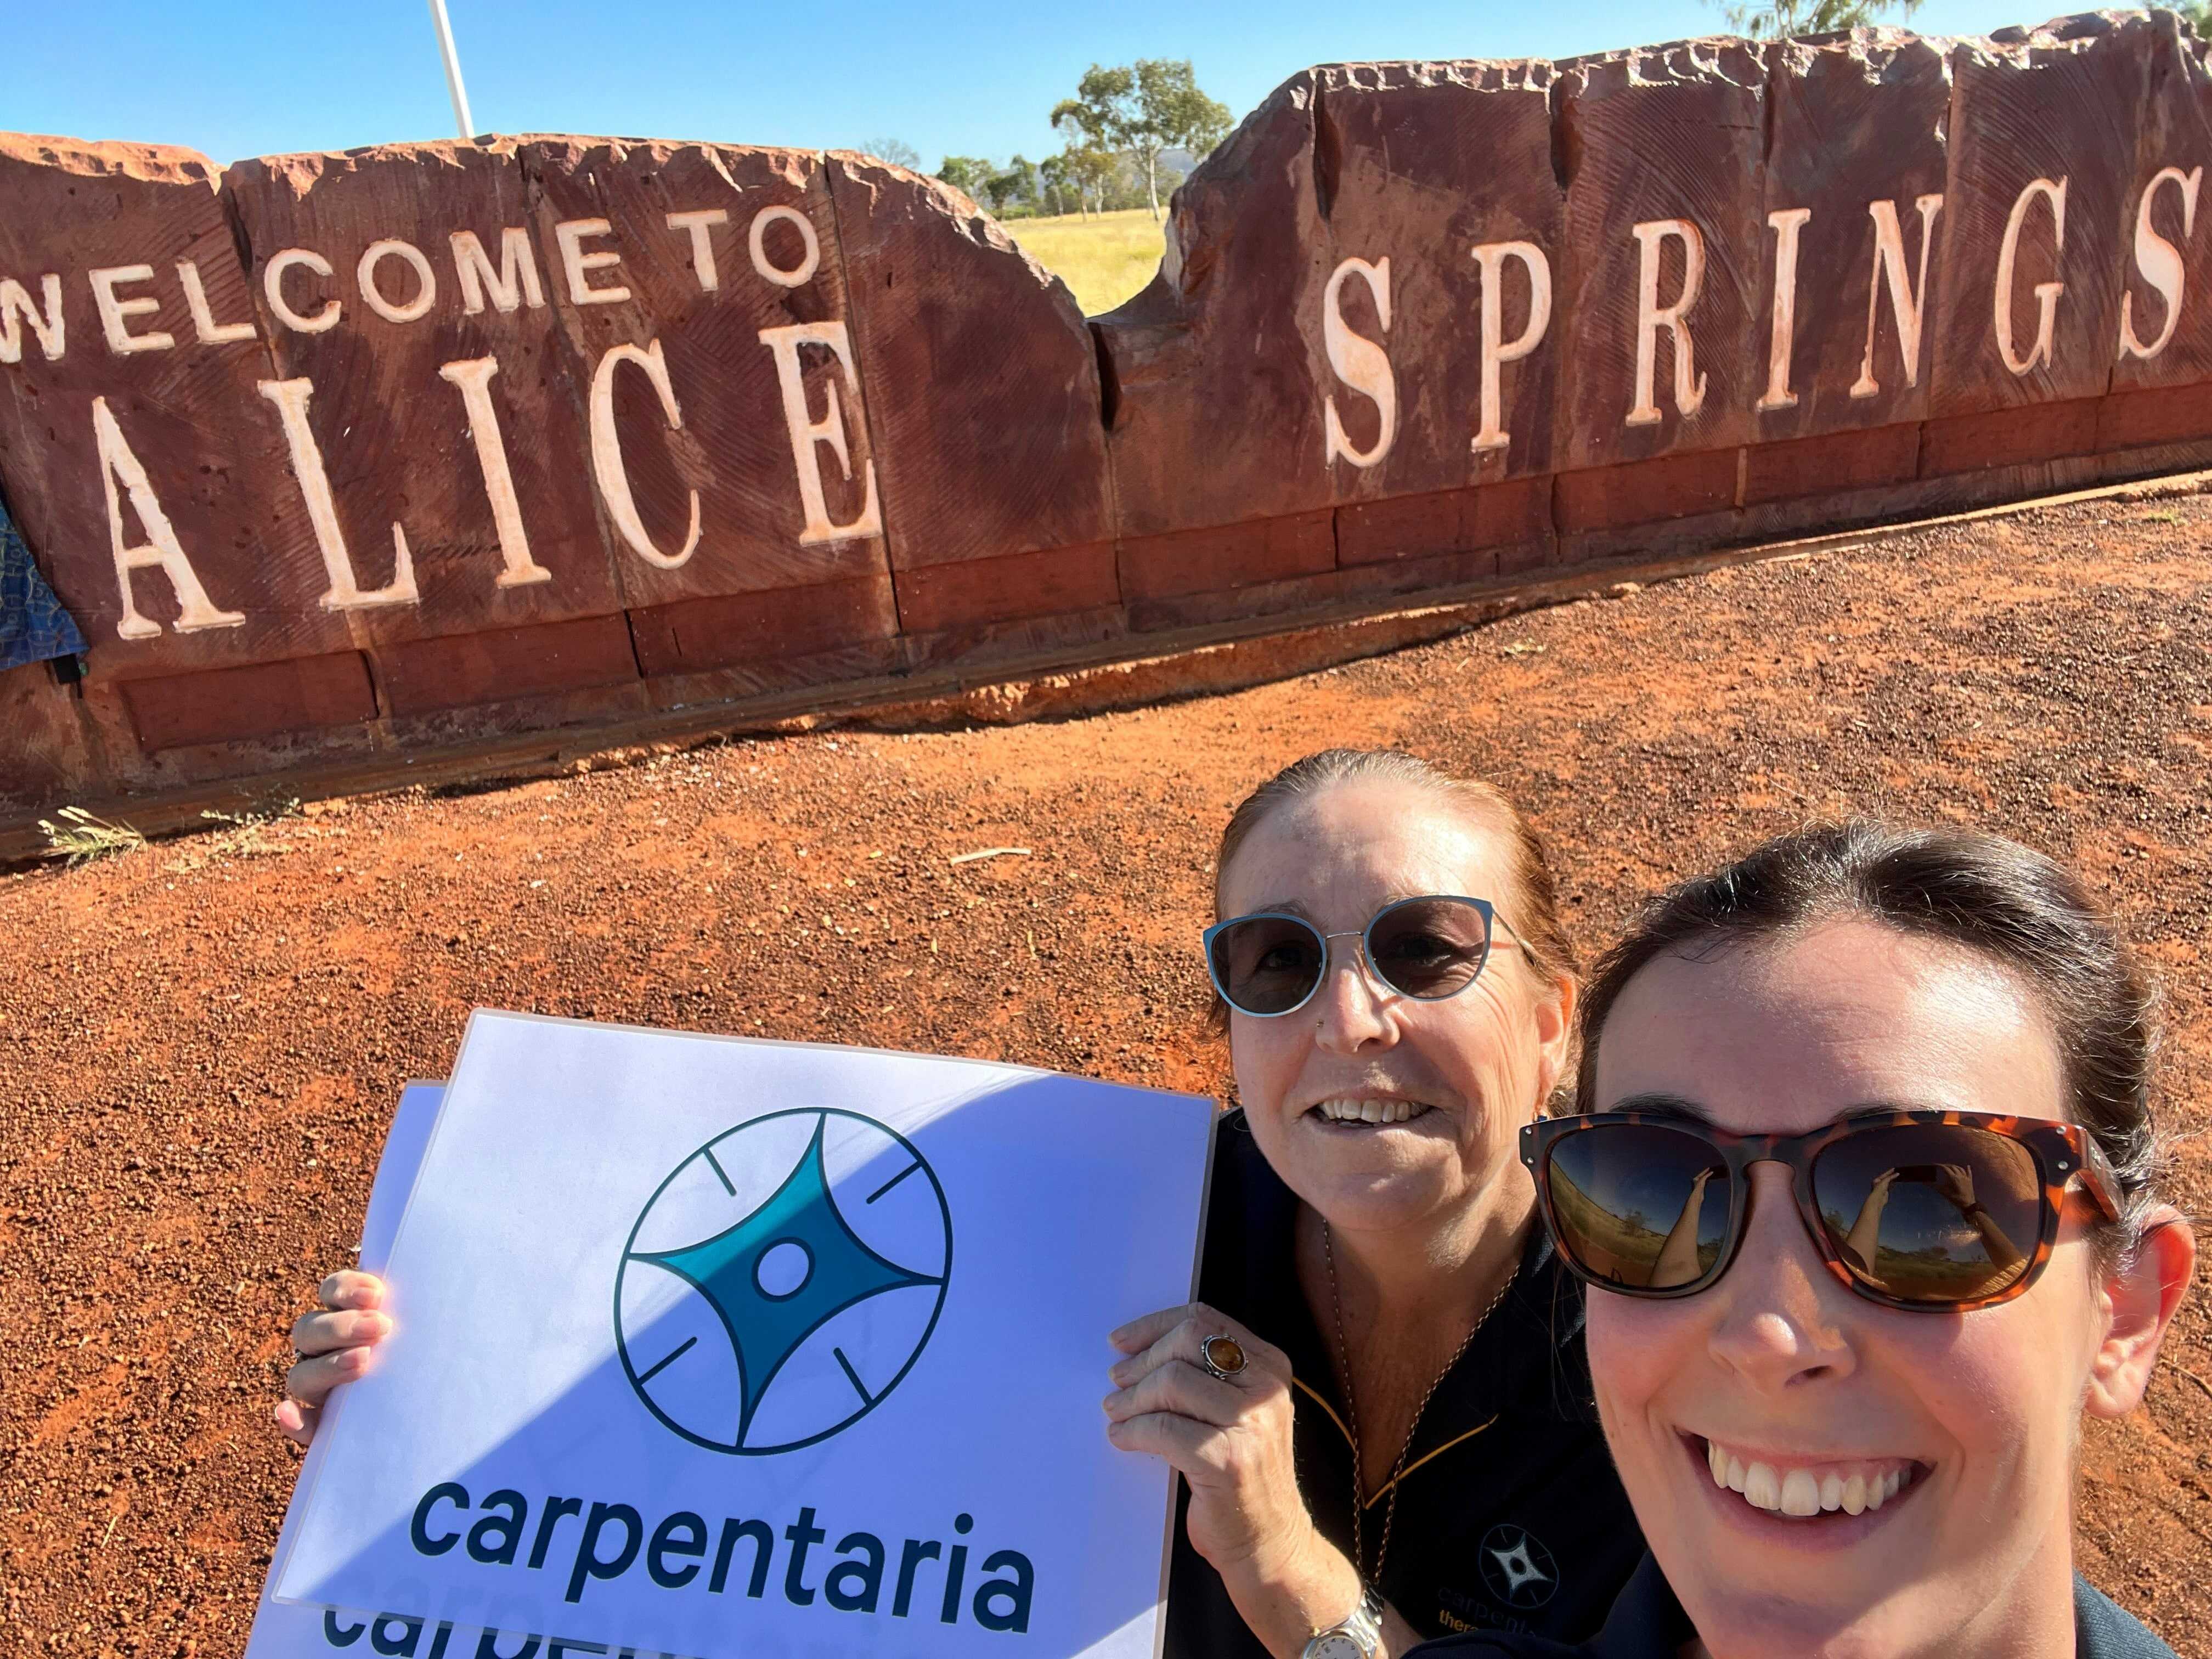 Alice Springs office to open soon!